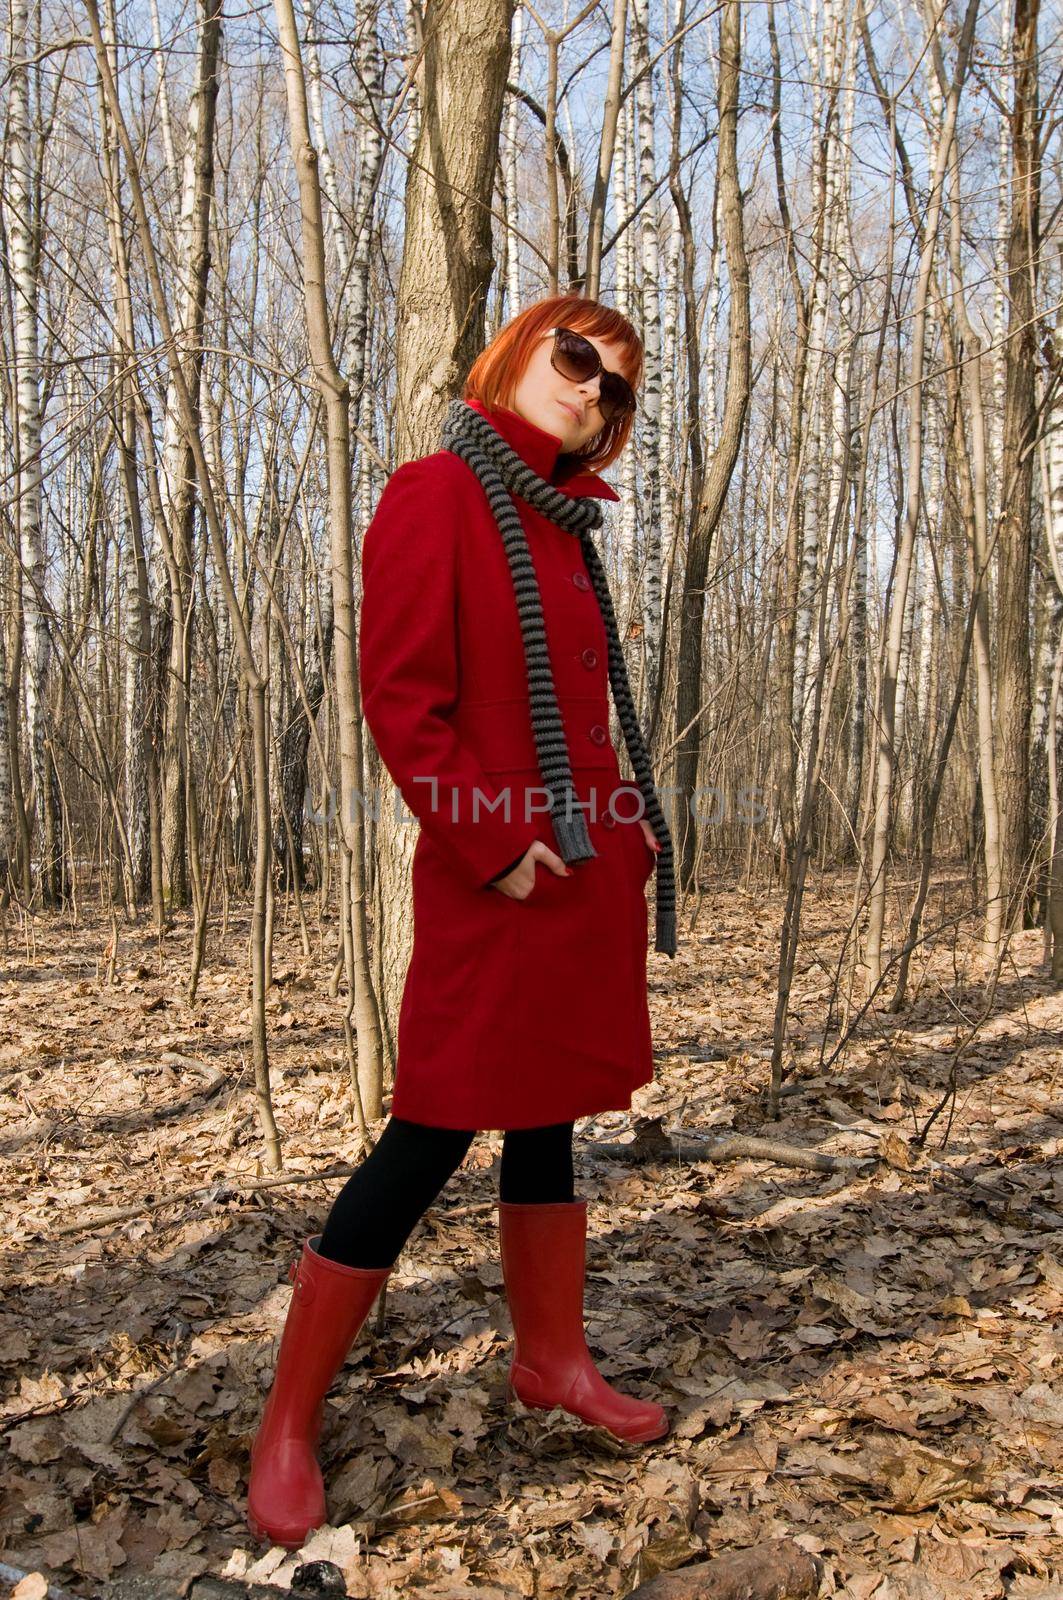 Beautiful girl wearing red coat and sunglasses by nikitabuida